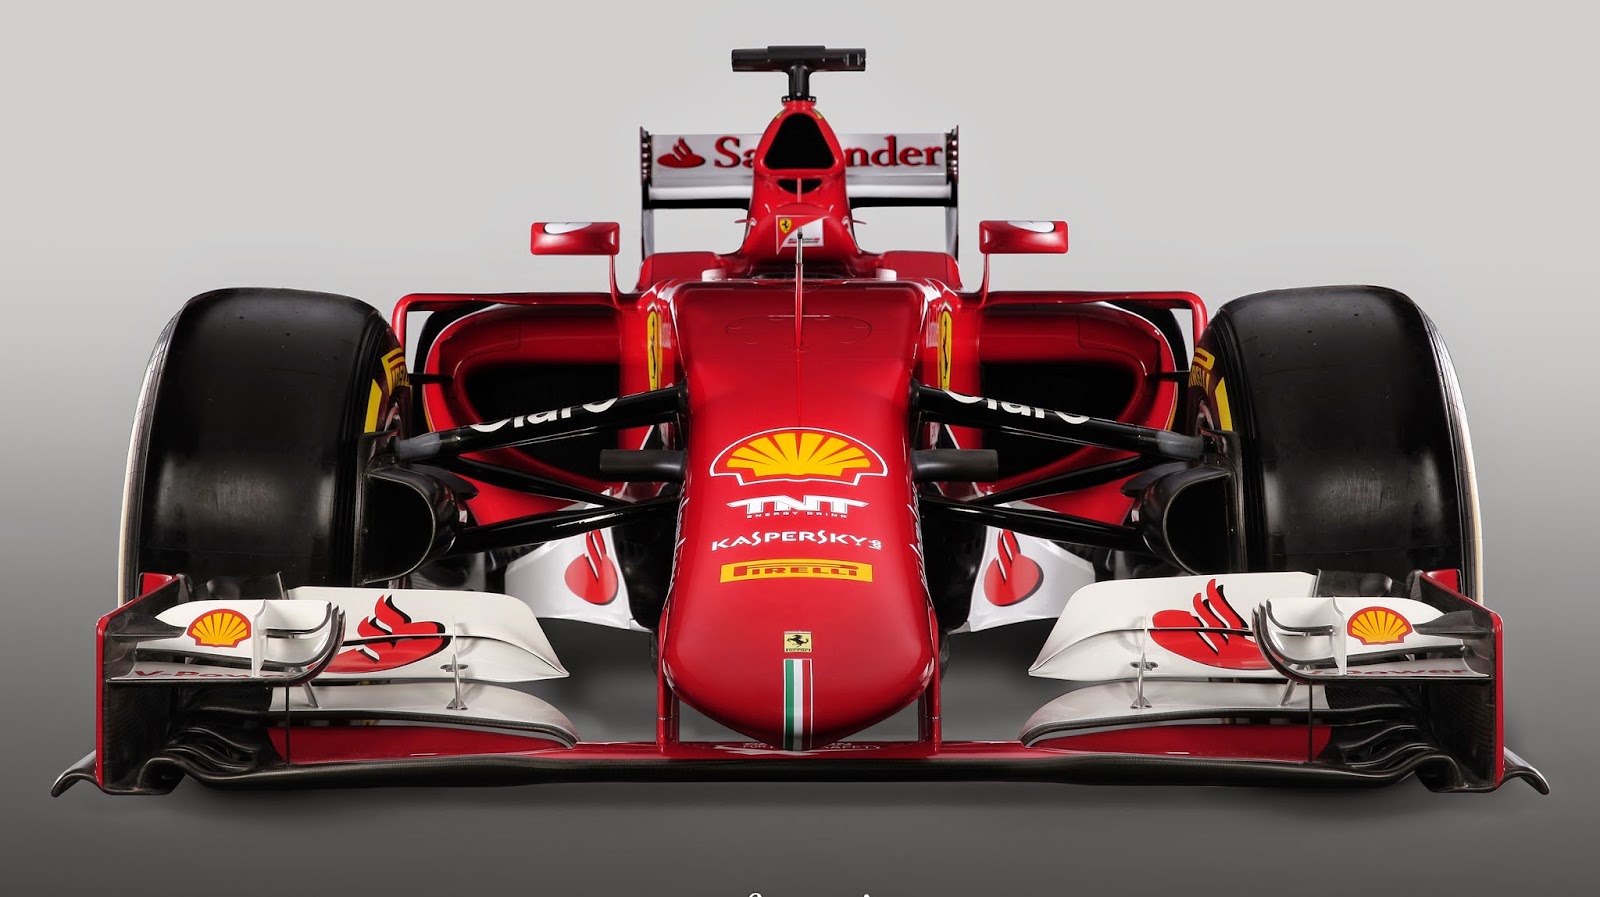 Ferrari sticking with pull-rod suspension on 2015 car